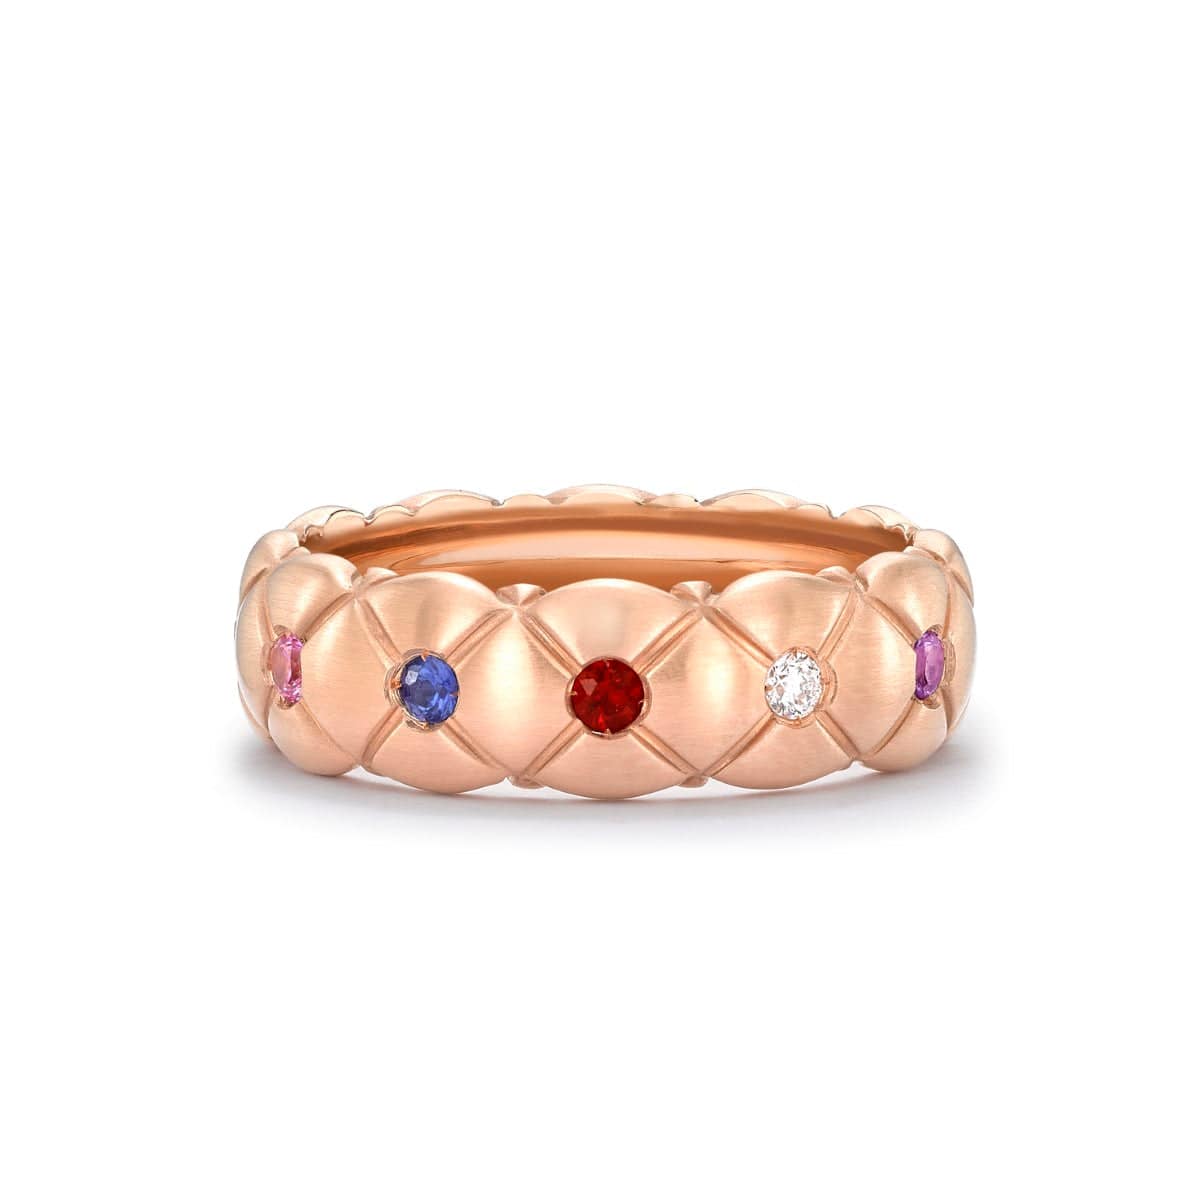 FABERGE Diamond & Multicolored Gemstones Ring